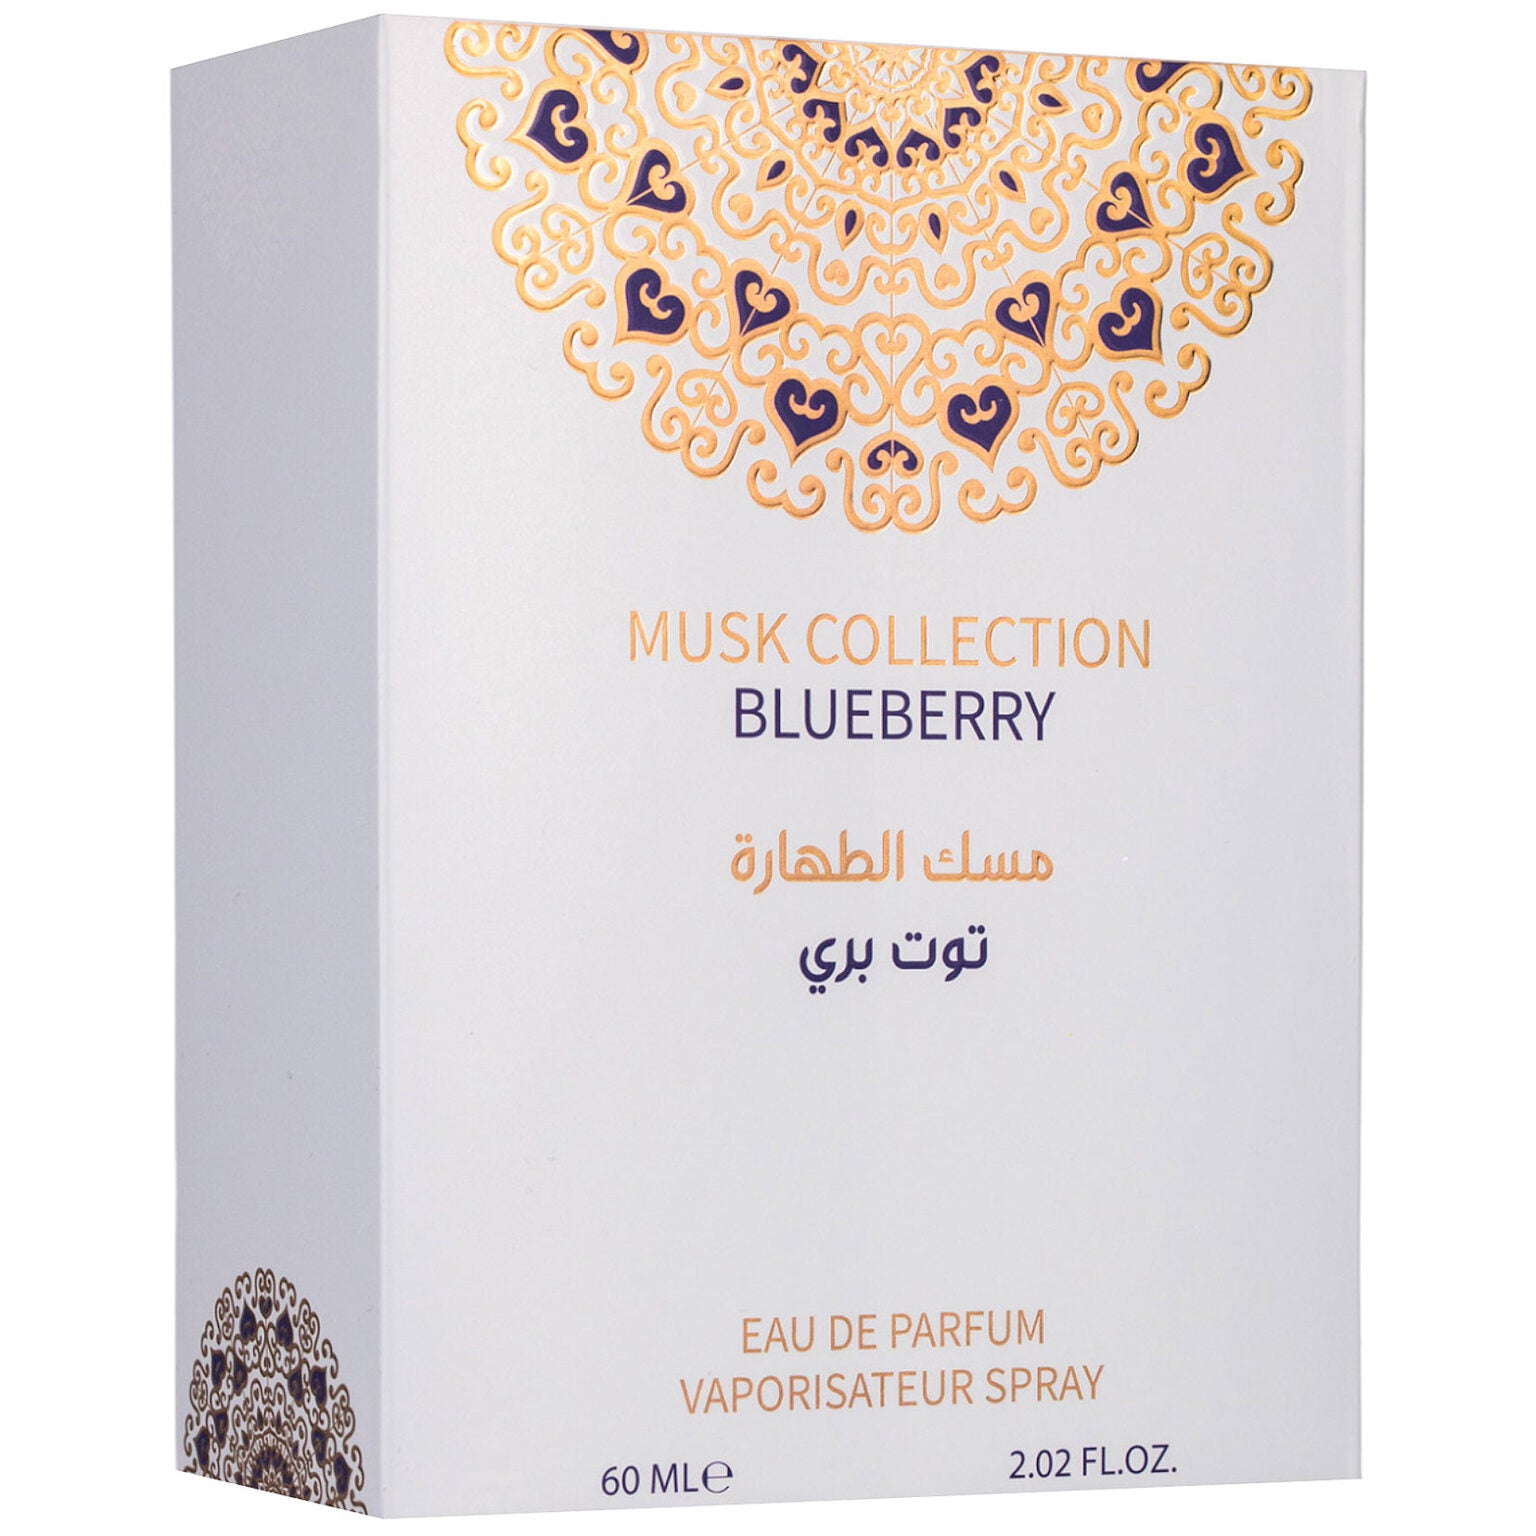 Gulf Orchid Blueberry Eau de Parfum 60 ml